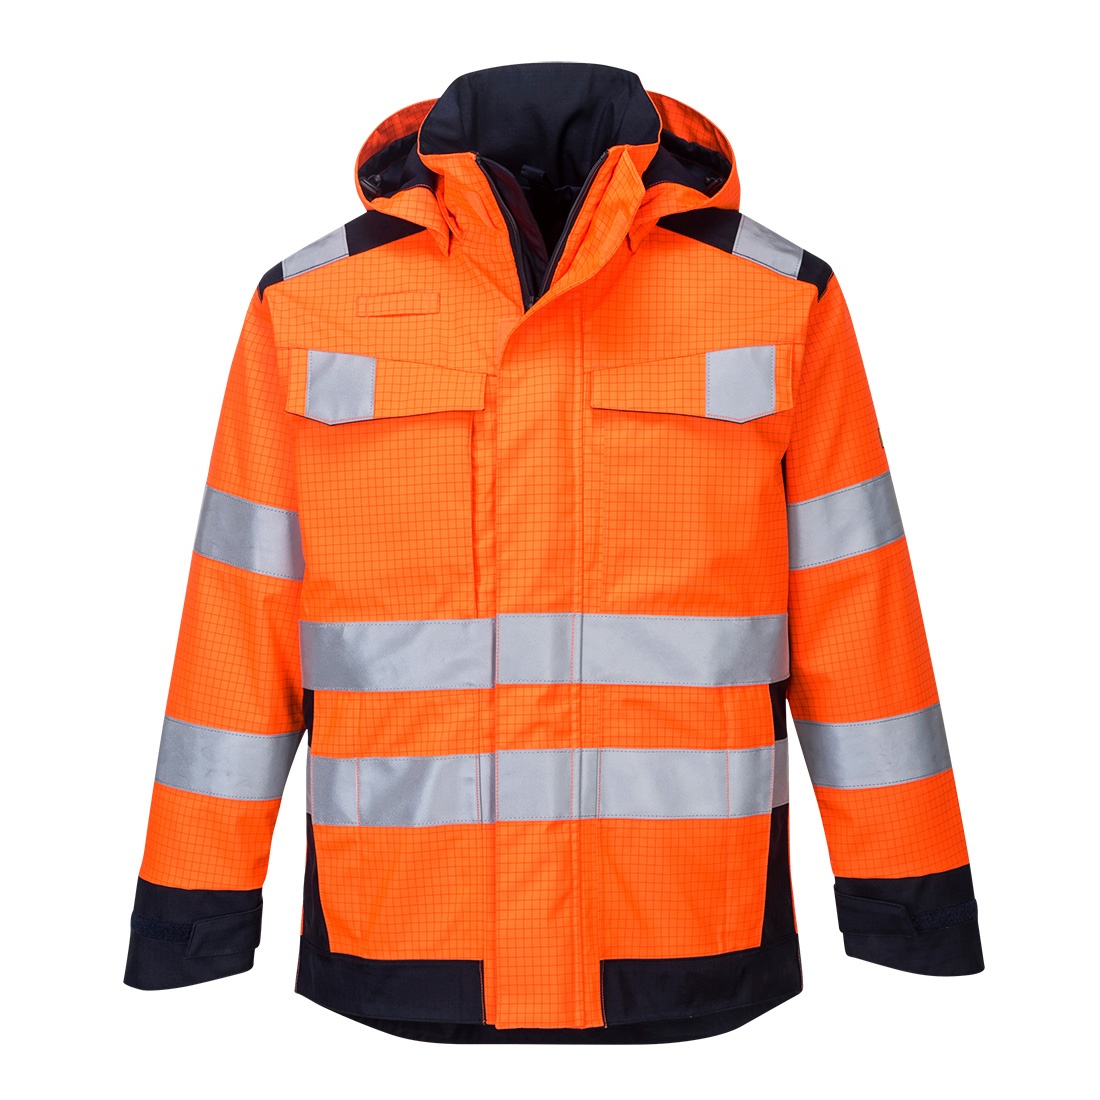 Portwest Modaflame Rain Jacket - Orange Front